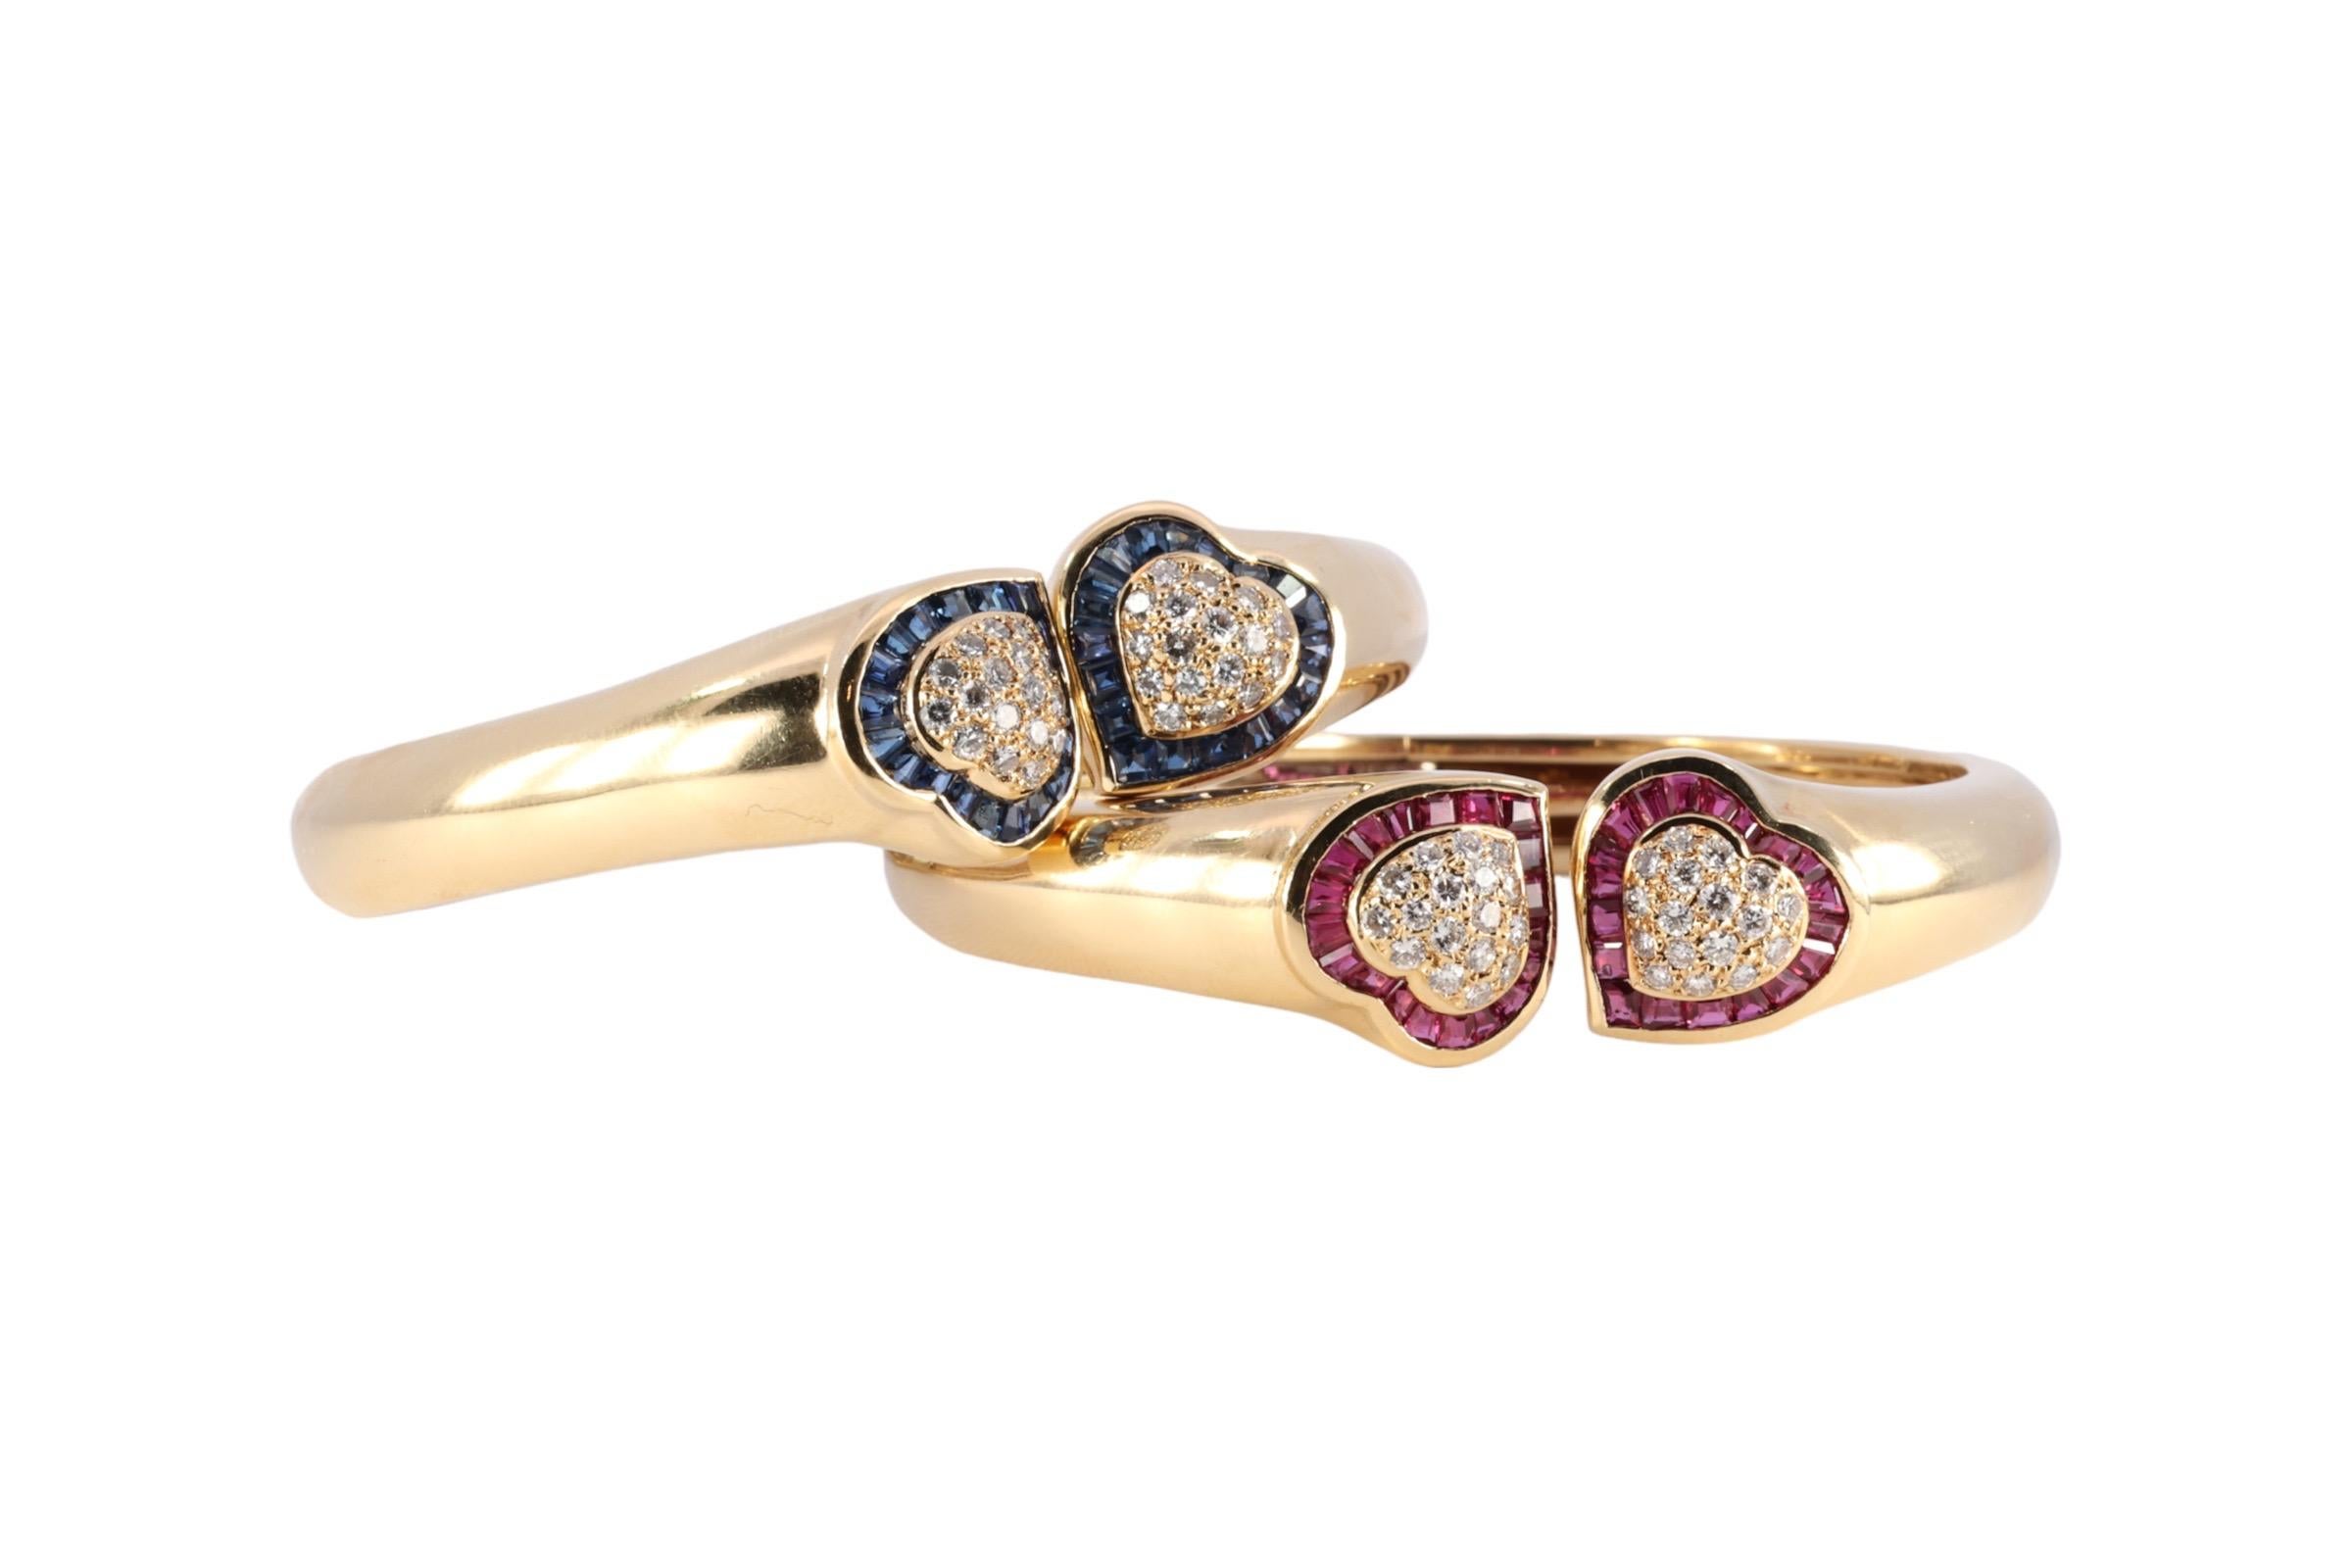 Artisan 18kt Gold Set of 2 Adler Genève Heart Bracelets Set with Sapphire, Rub, Diamonds